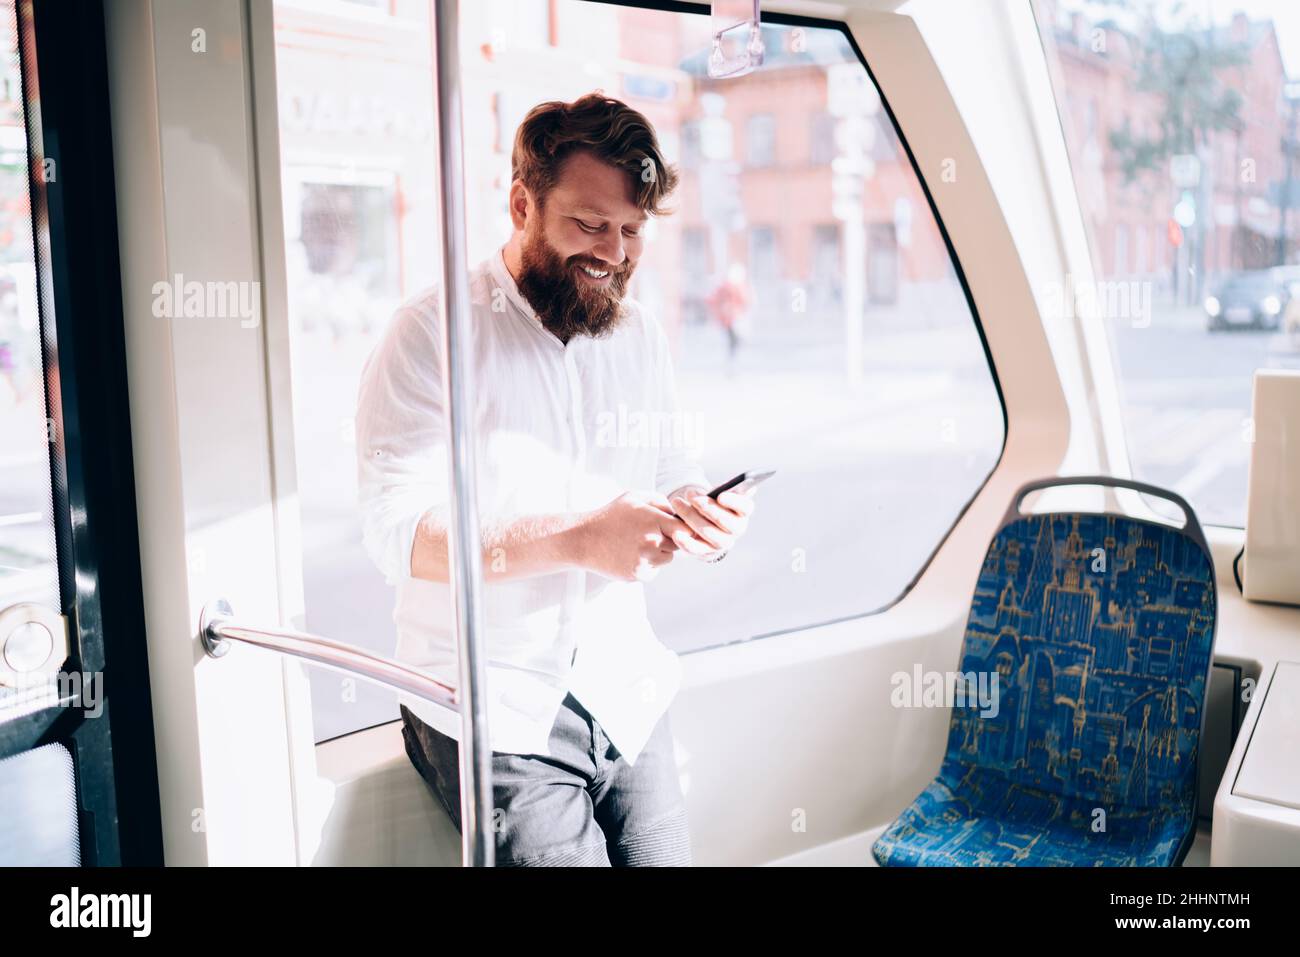 Bearded man using phone in bus Stock Photo